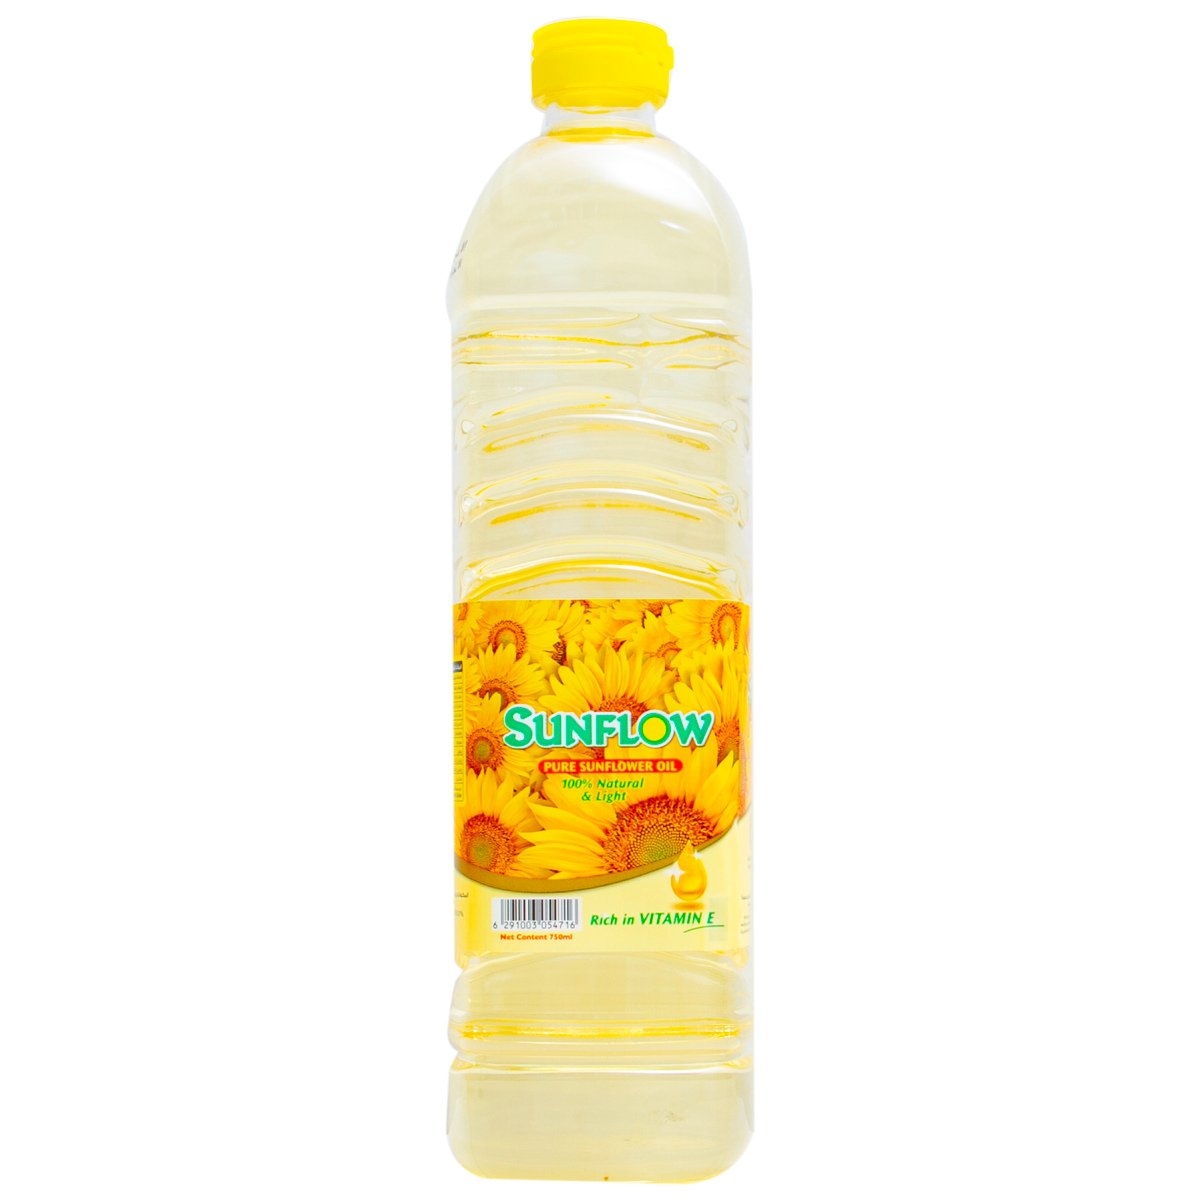 Sunflow Pure Sunflower Oil 750ml Online at Best Price Sunflower Oil